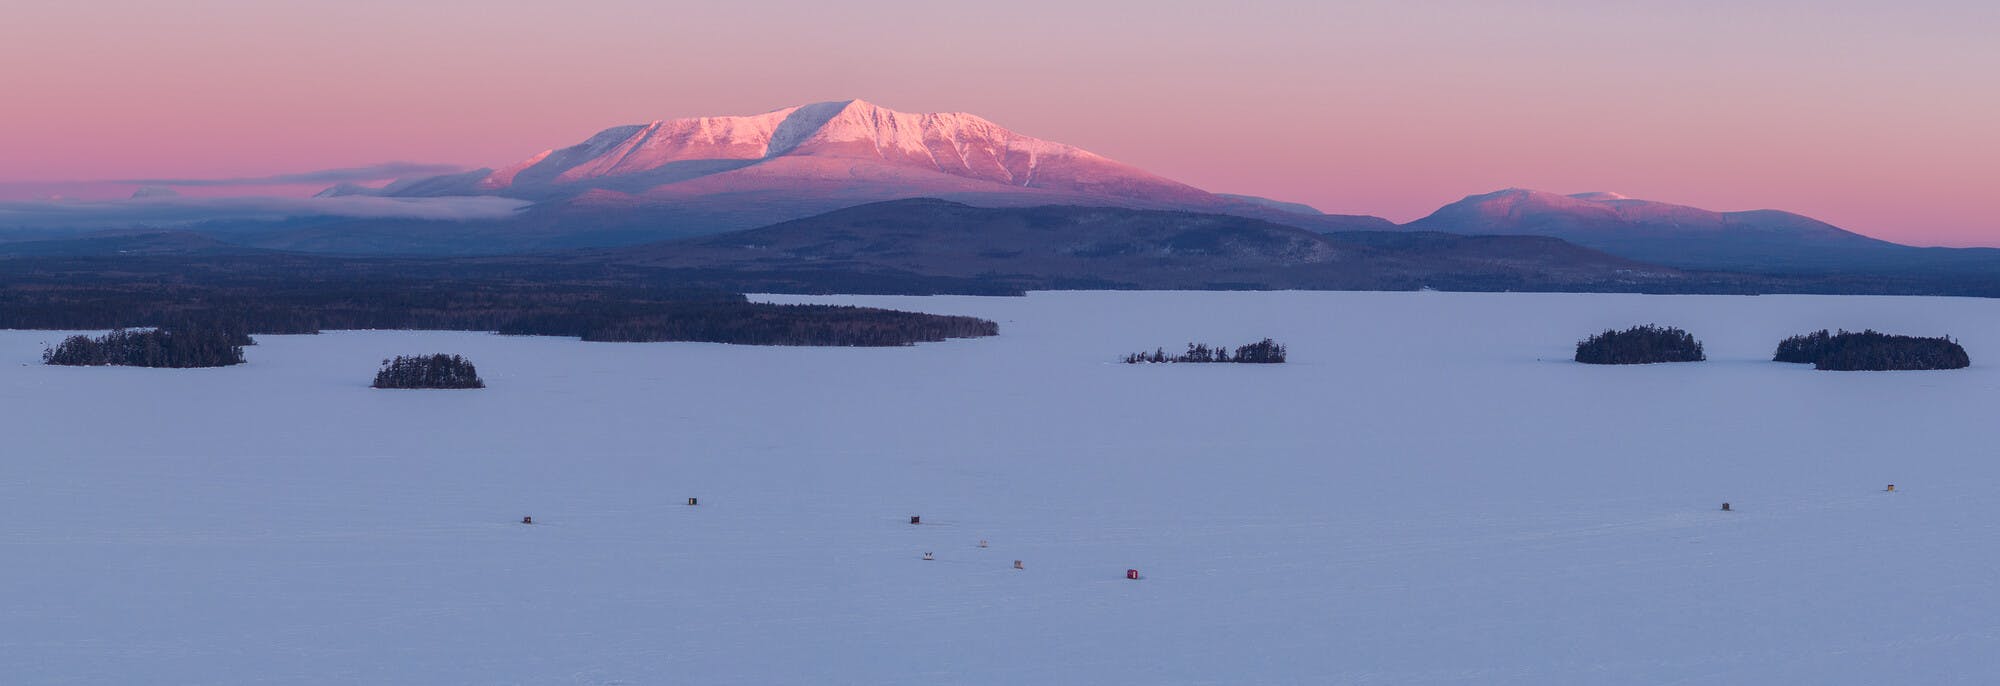 Mt. Katahdin and Ice Fishing Shacks at Sunrise